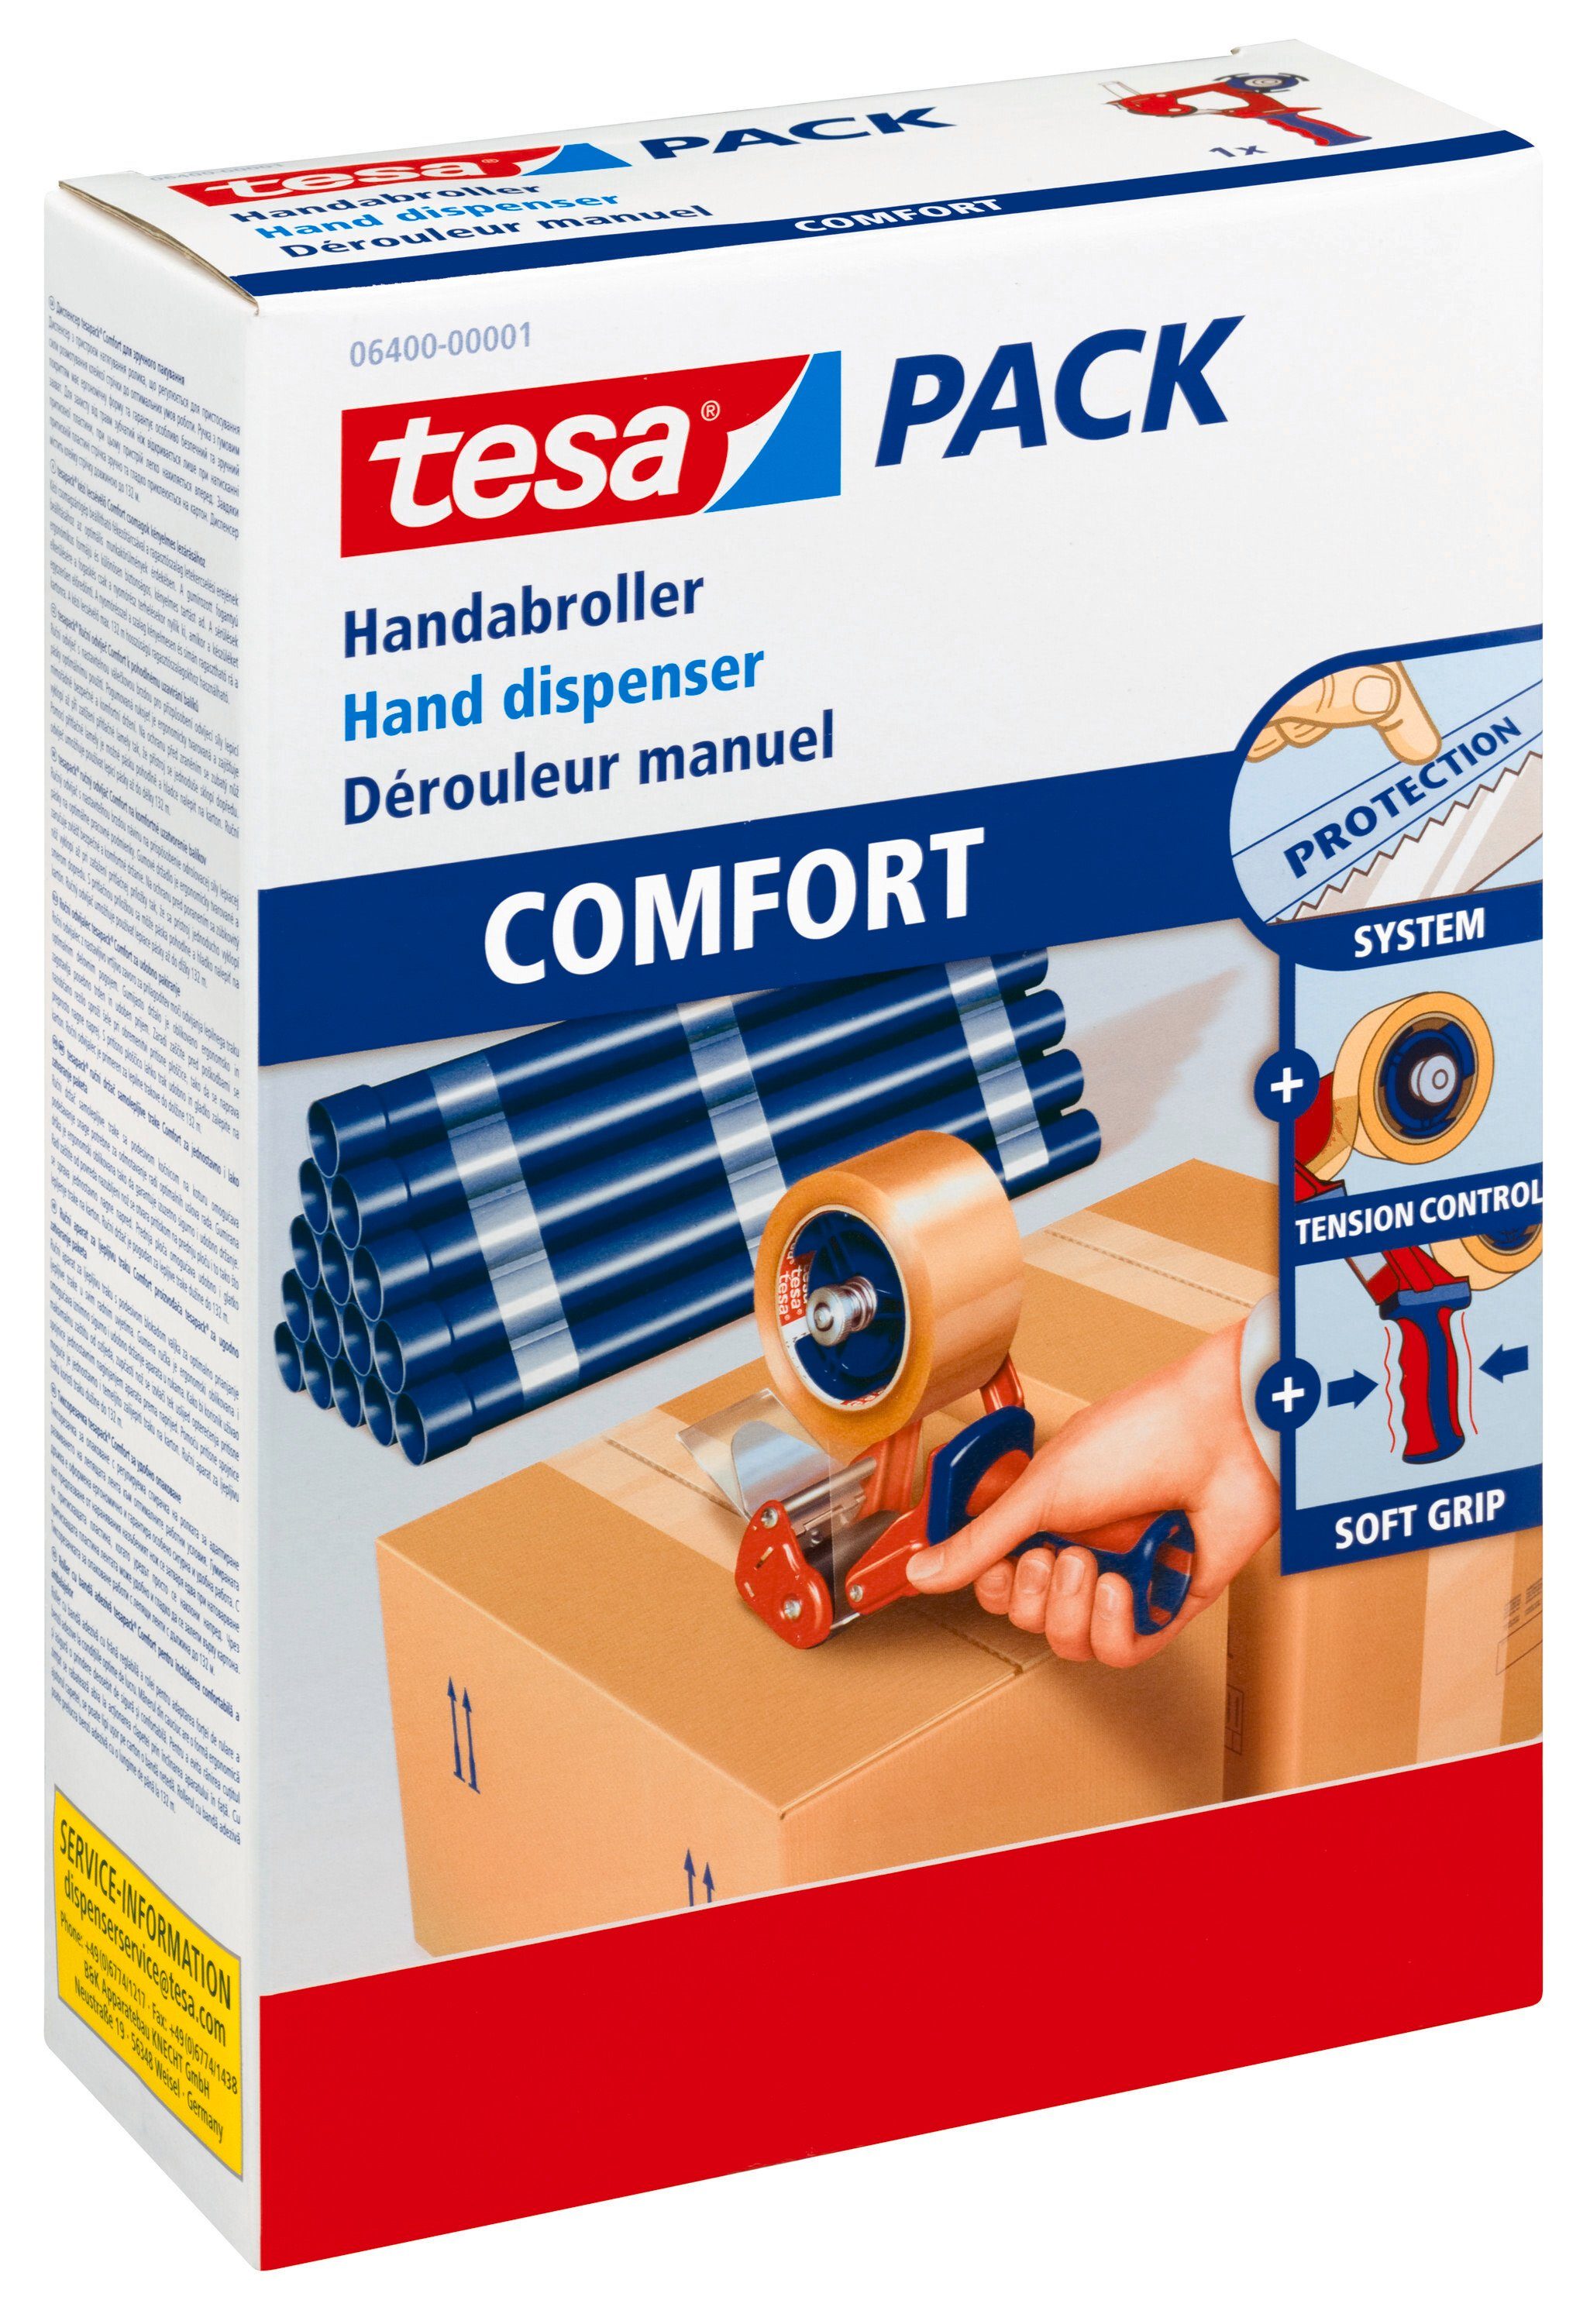 tesa Klebeband tesapack COMFORT Handabroller & rot / sicheres für (Packung, - leichtes Verpacken Packbandabroller 1-St) blau